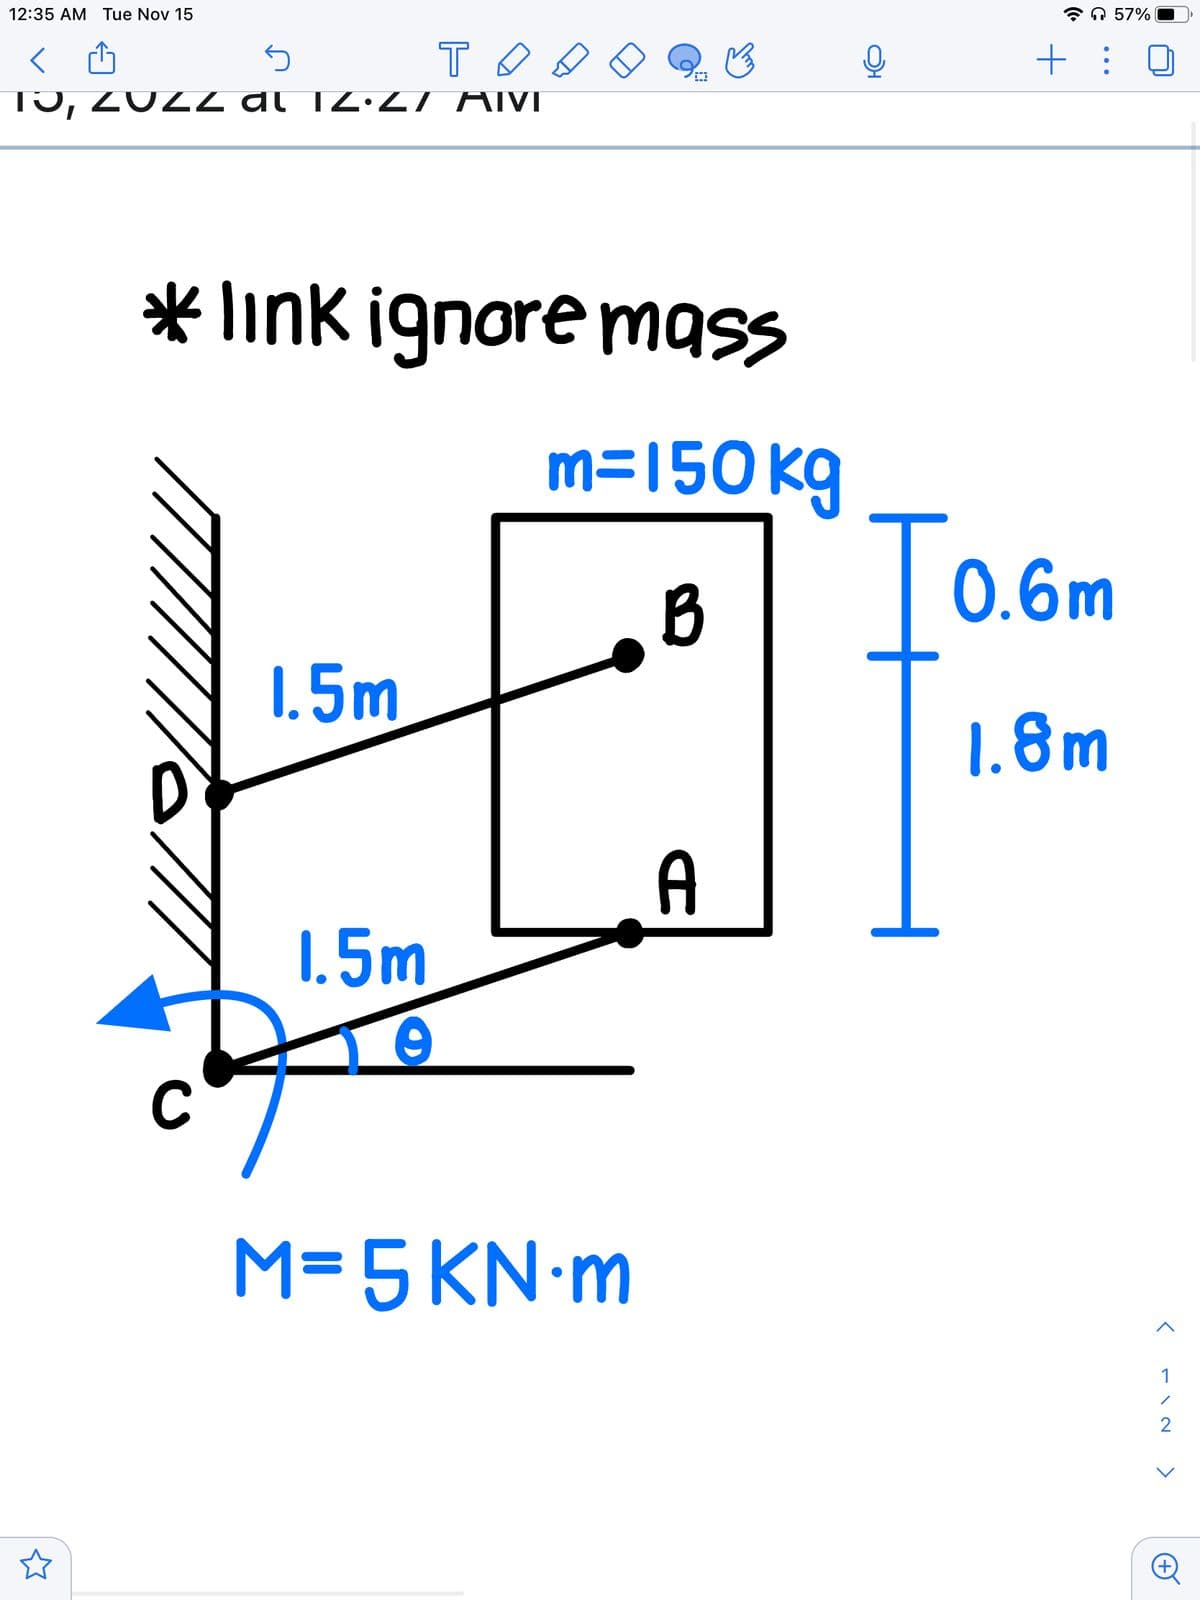 12:35 AM Tue Nov 15
<
то
TJ, 2022 dl 12.27 MIVI
* link ignore mass
m=150 kg
1.5m
1.5m
Iº
B
Ell
A
M=5KN•m
57%
+: 0
0.6m
1.8m
<
112
>